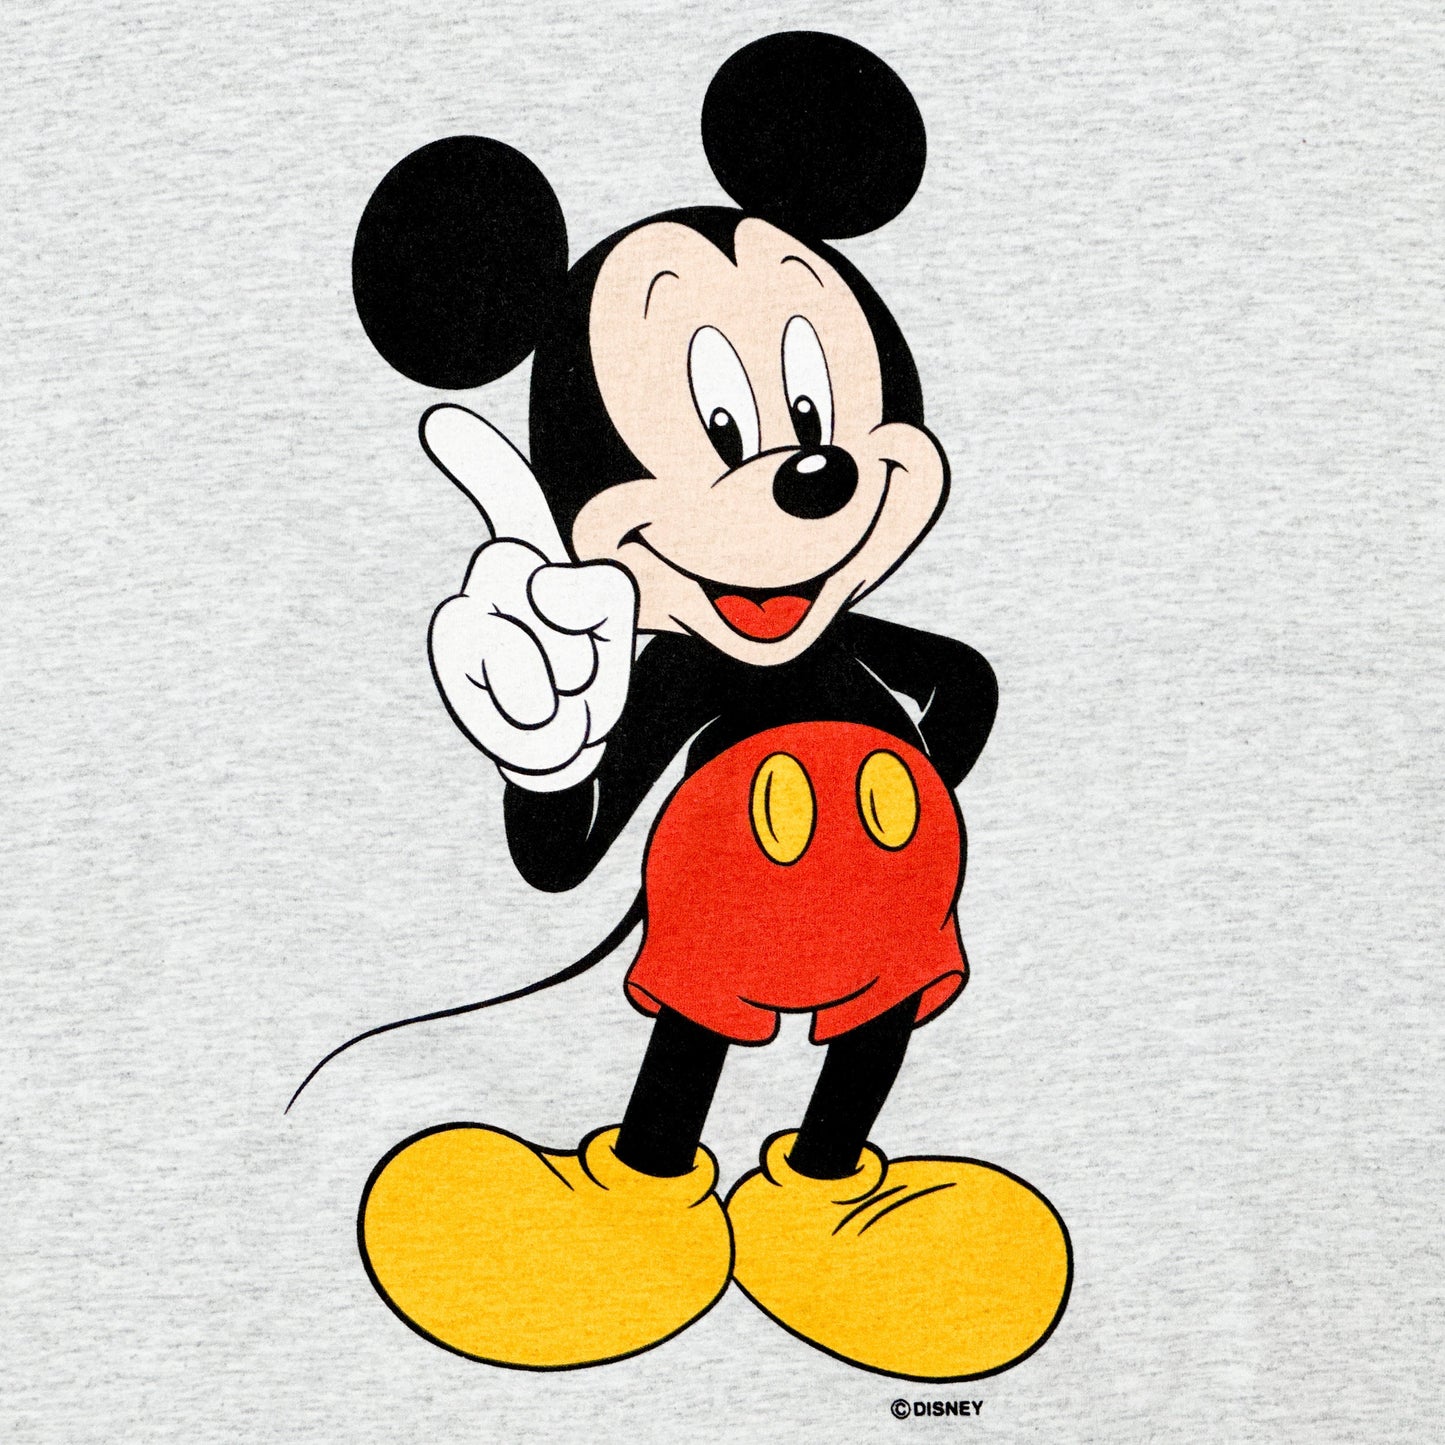 XXL 90s Mickey Mouse T Shirt | Vintage Heather Grey Disney Cartoon Graphic Tee